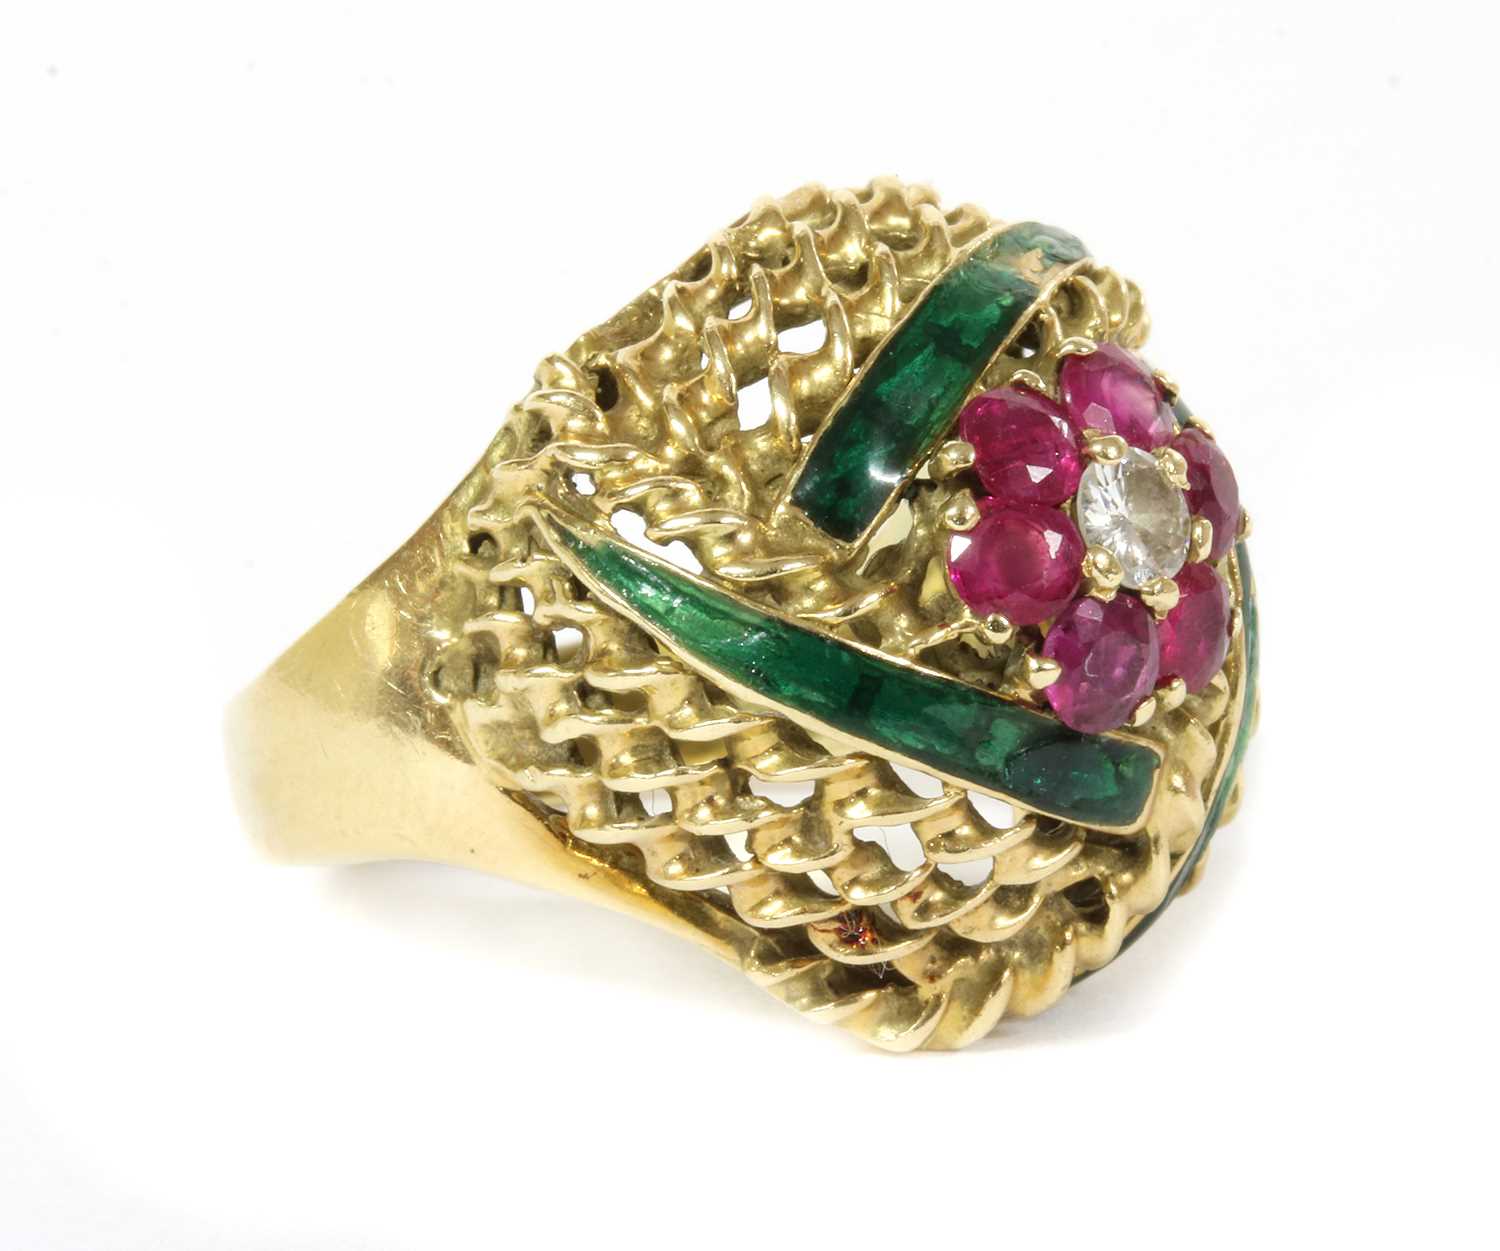 Lot 16 - An Austrian gold diamond, ruby and enamel bombé ring